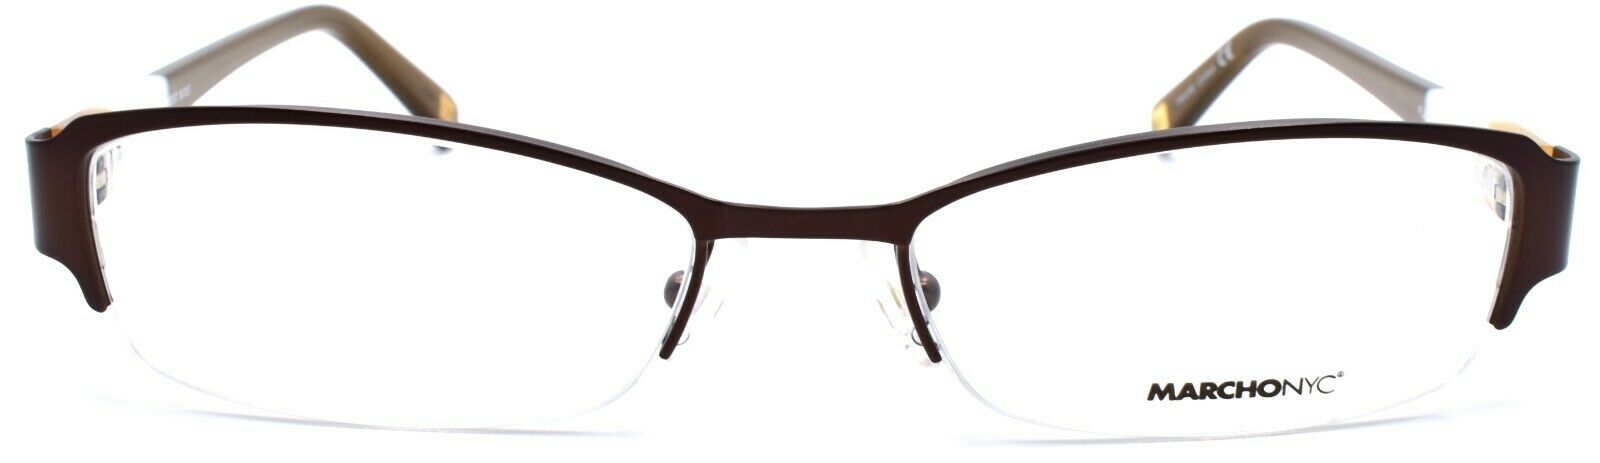 2-Marchon Plaza 210 Women's Eyeglasses Frames Half-rim 50-17-135 Satin Brown-883121938717-IKSpecs